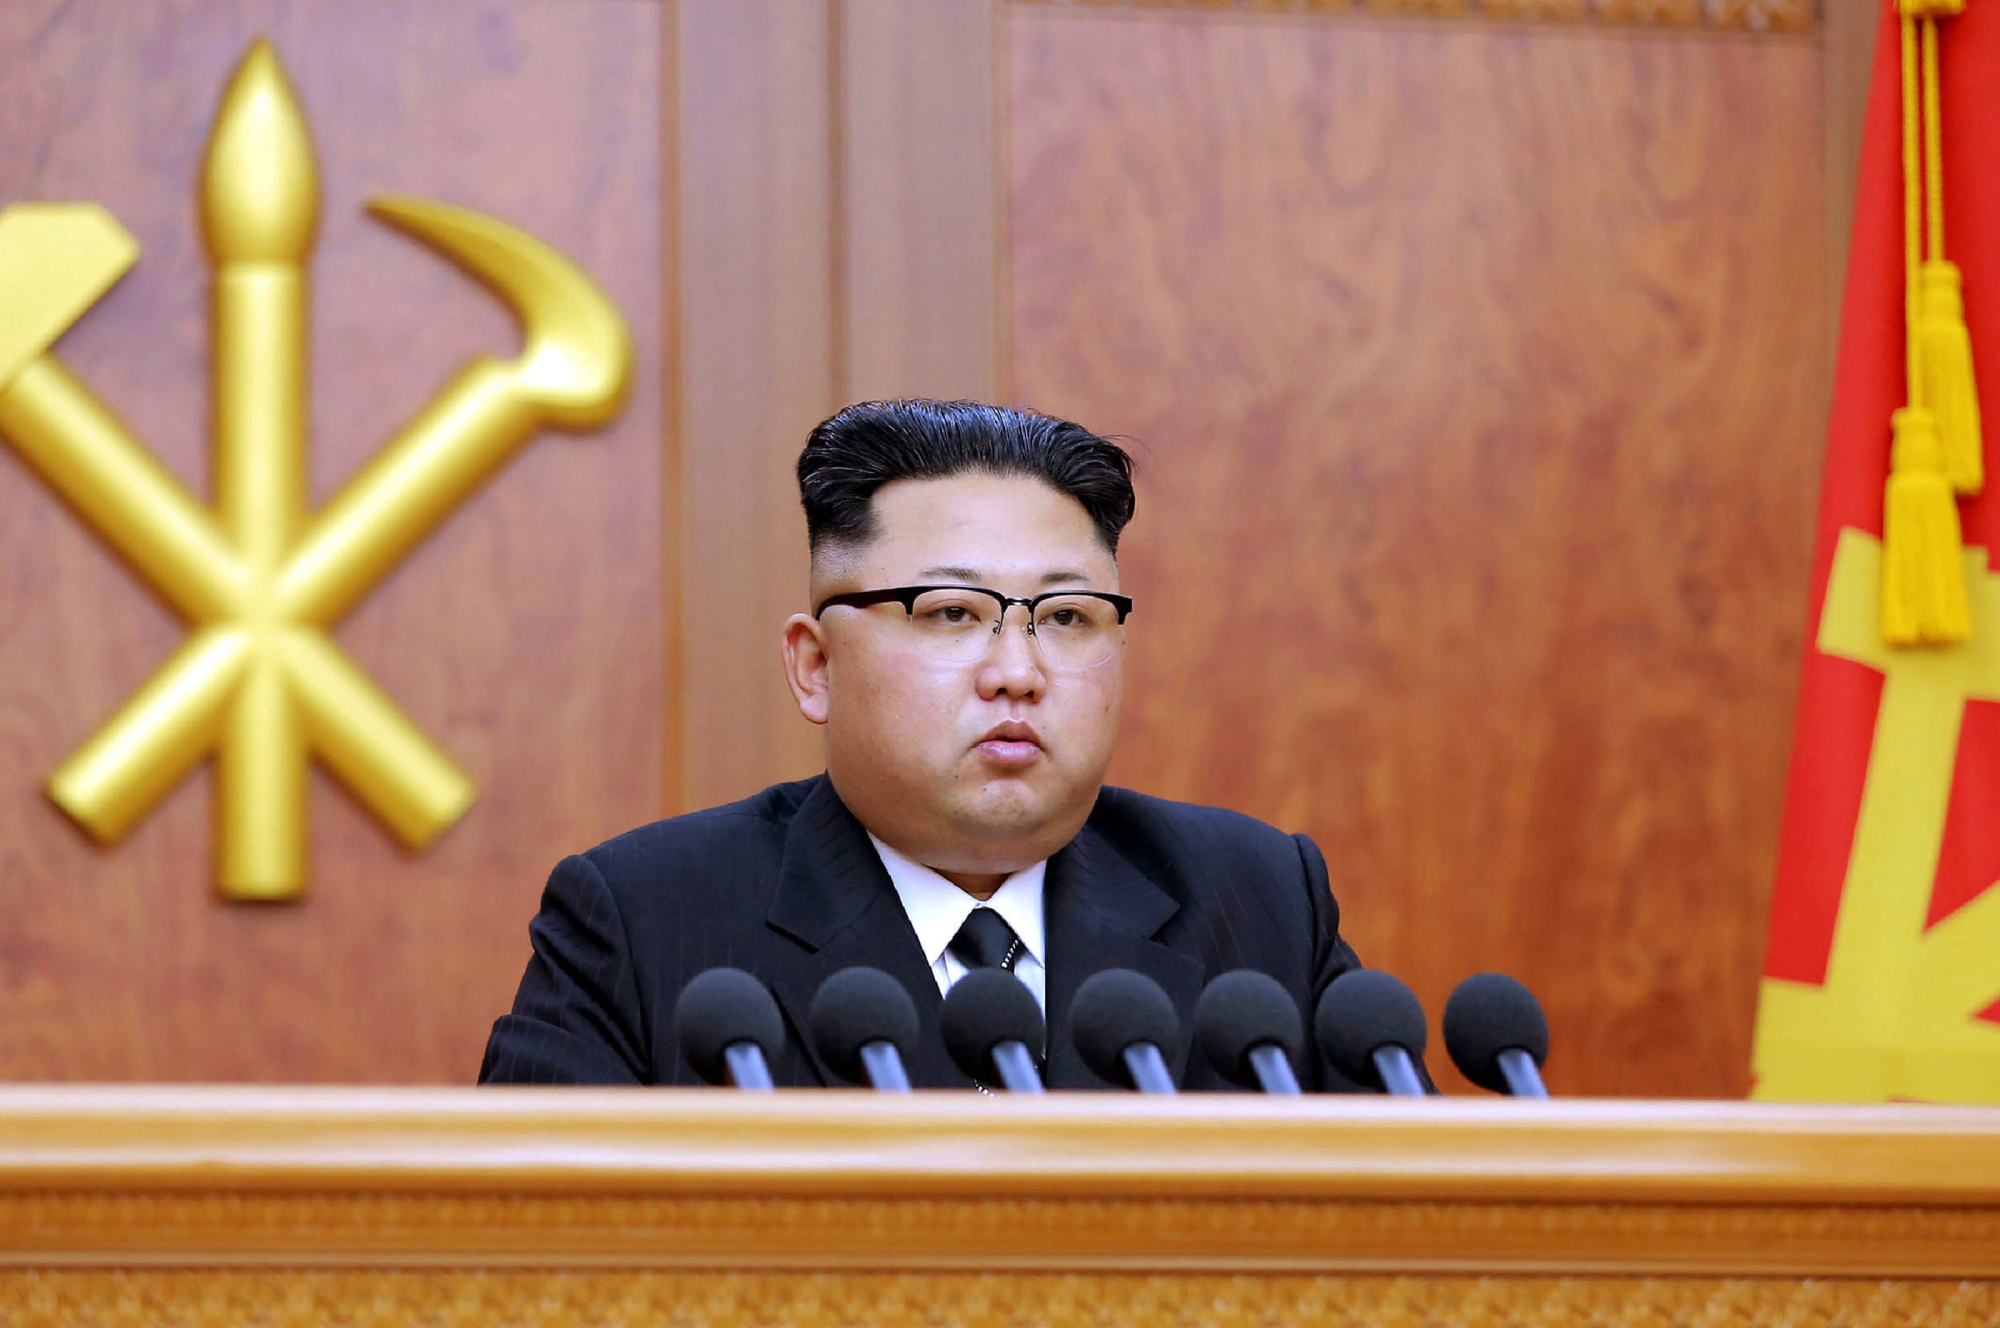 UN Council unanimously condemns North Korea missile test